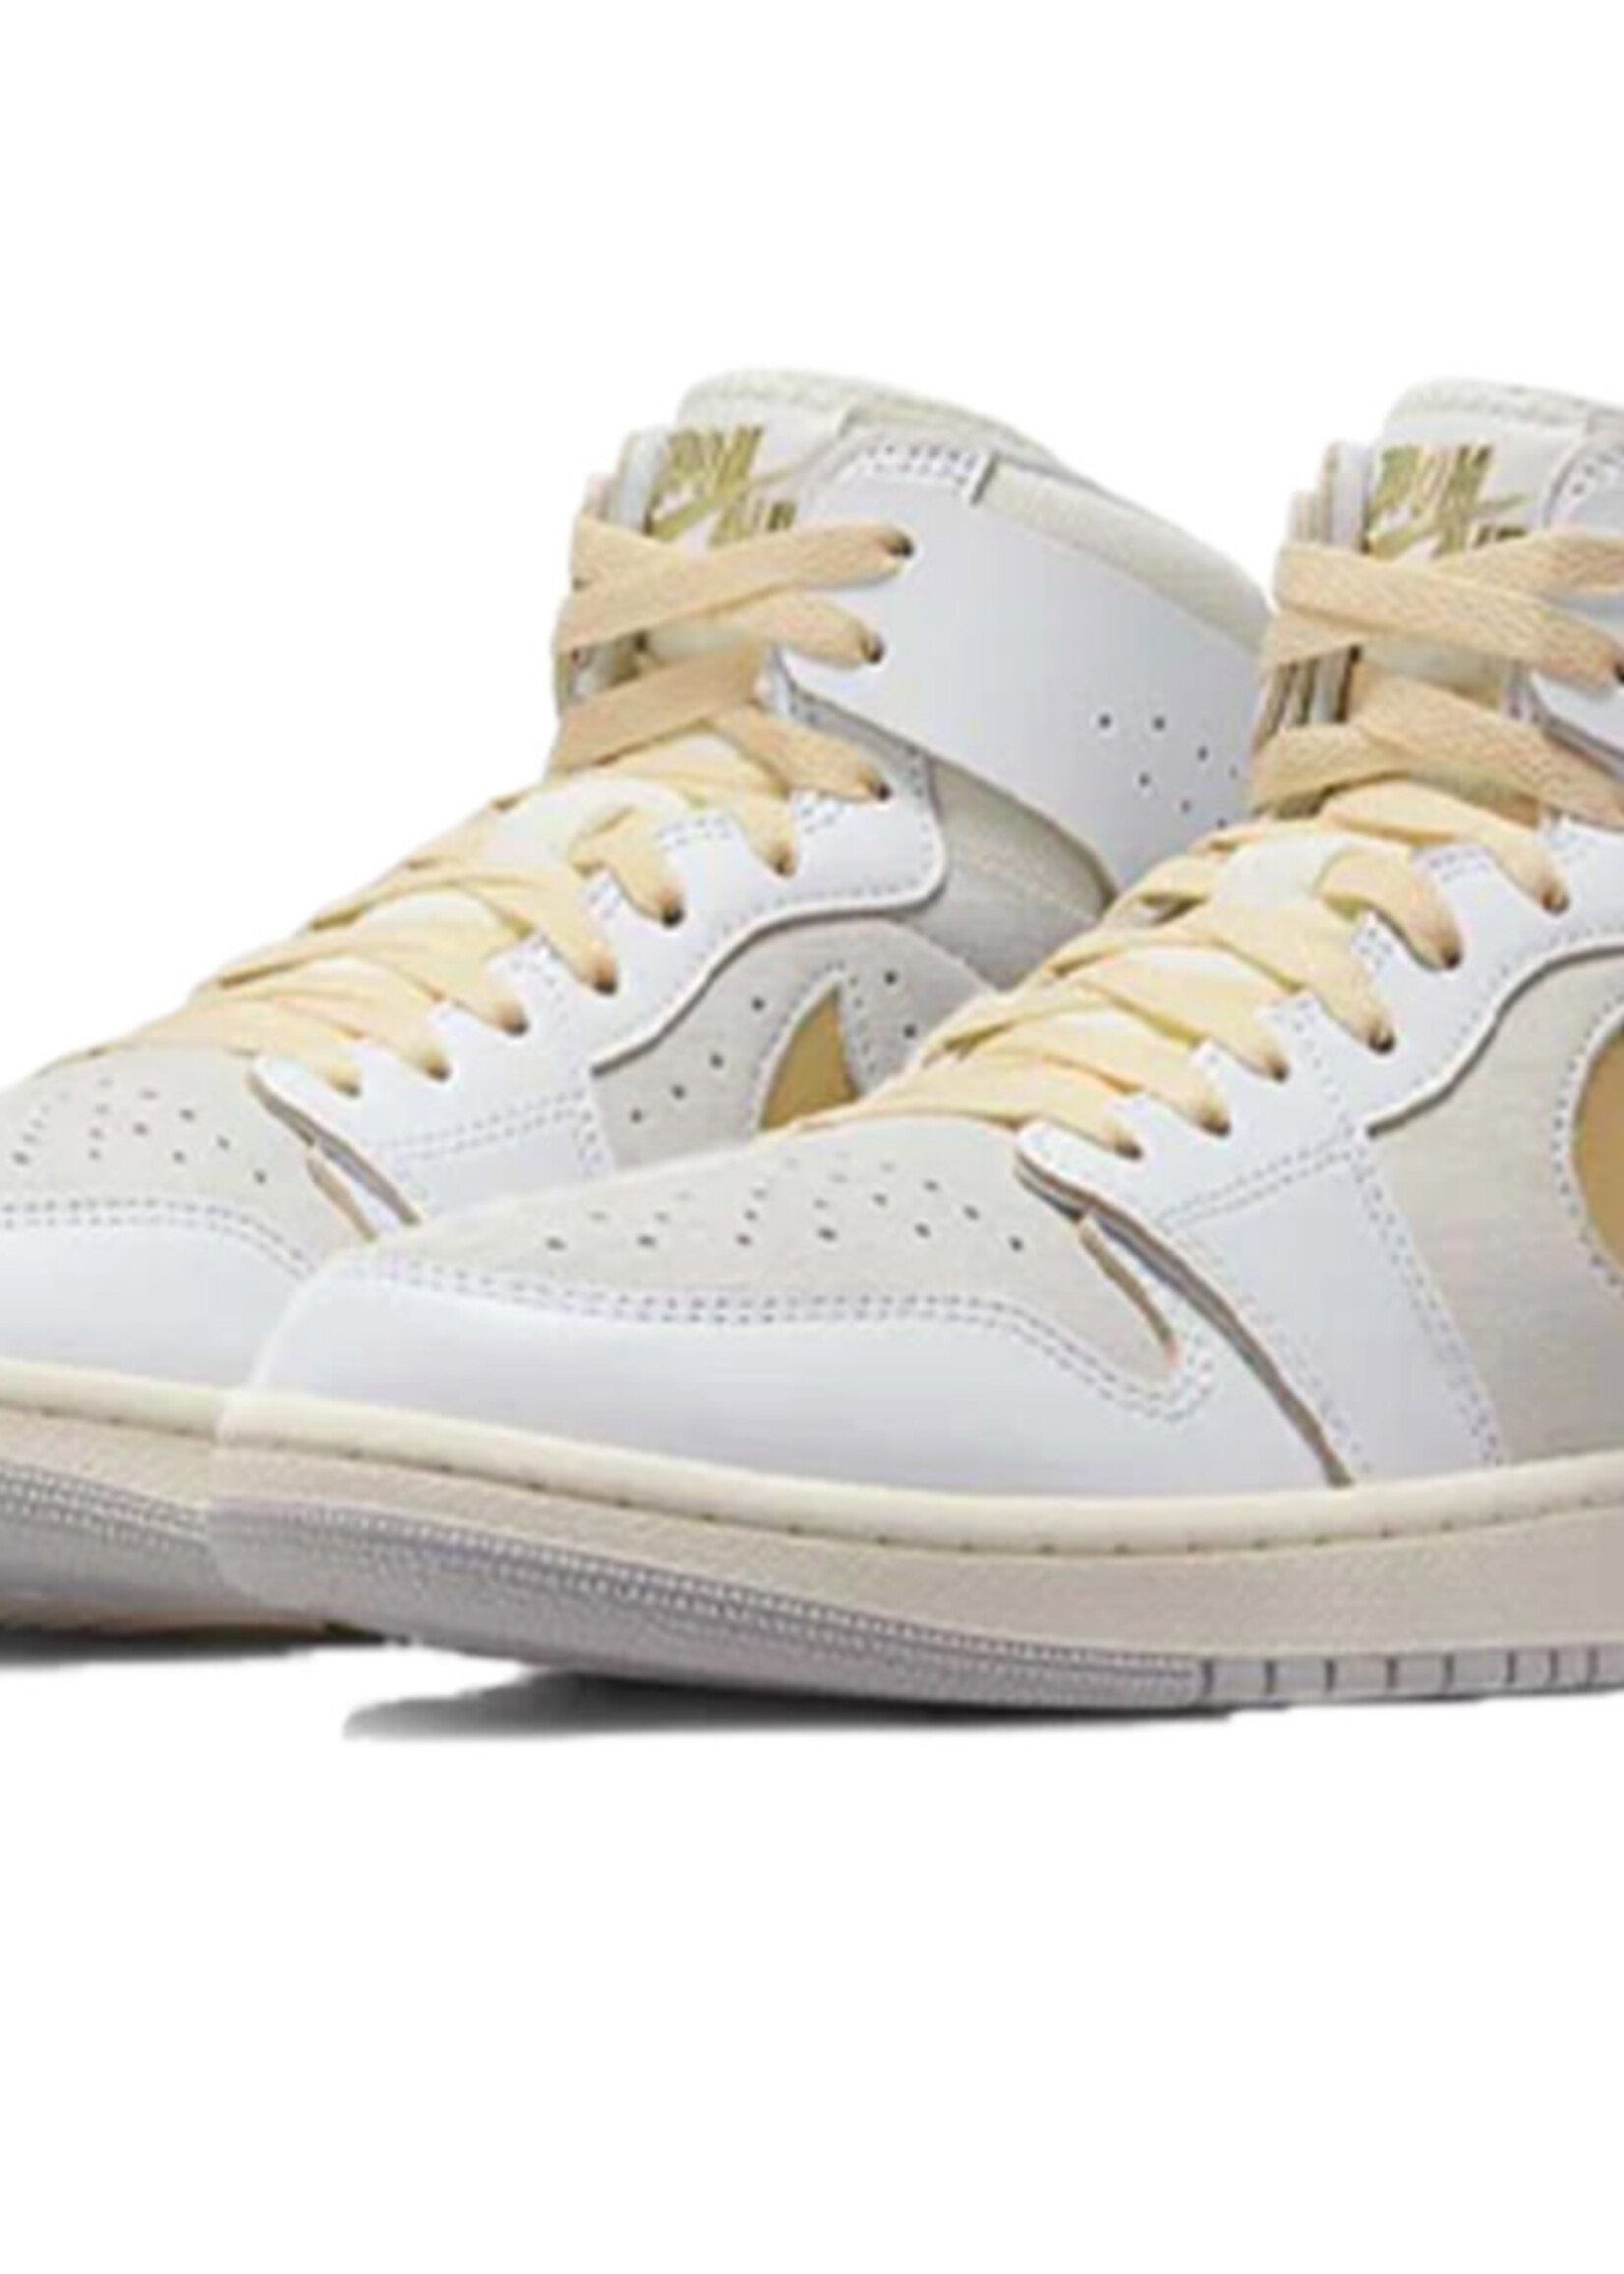 Nike Air Jordan 1 Zoom CMFT 2 Sneaker White Metallic Gold